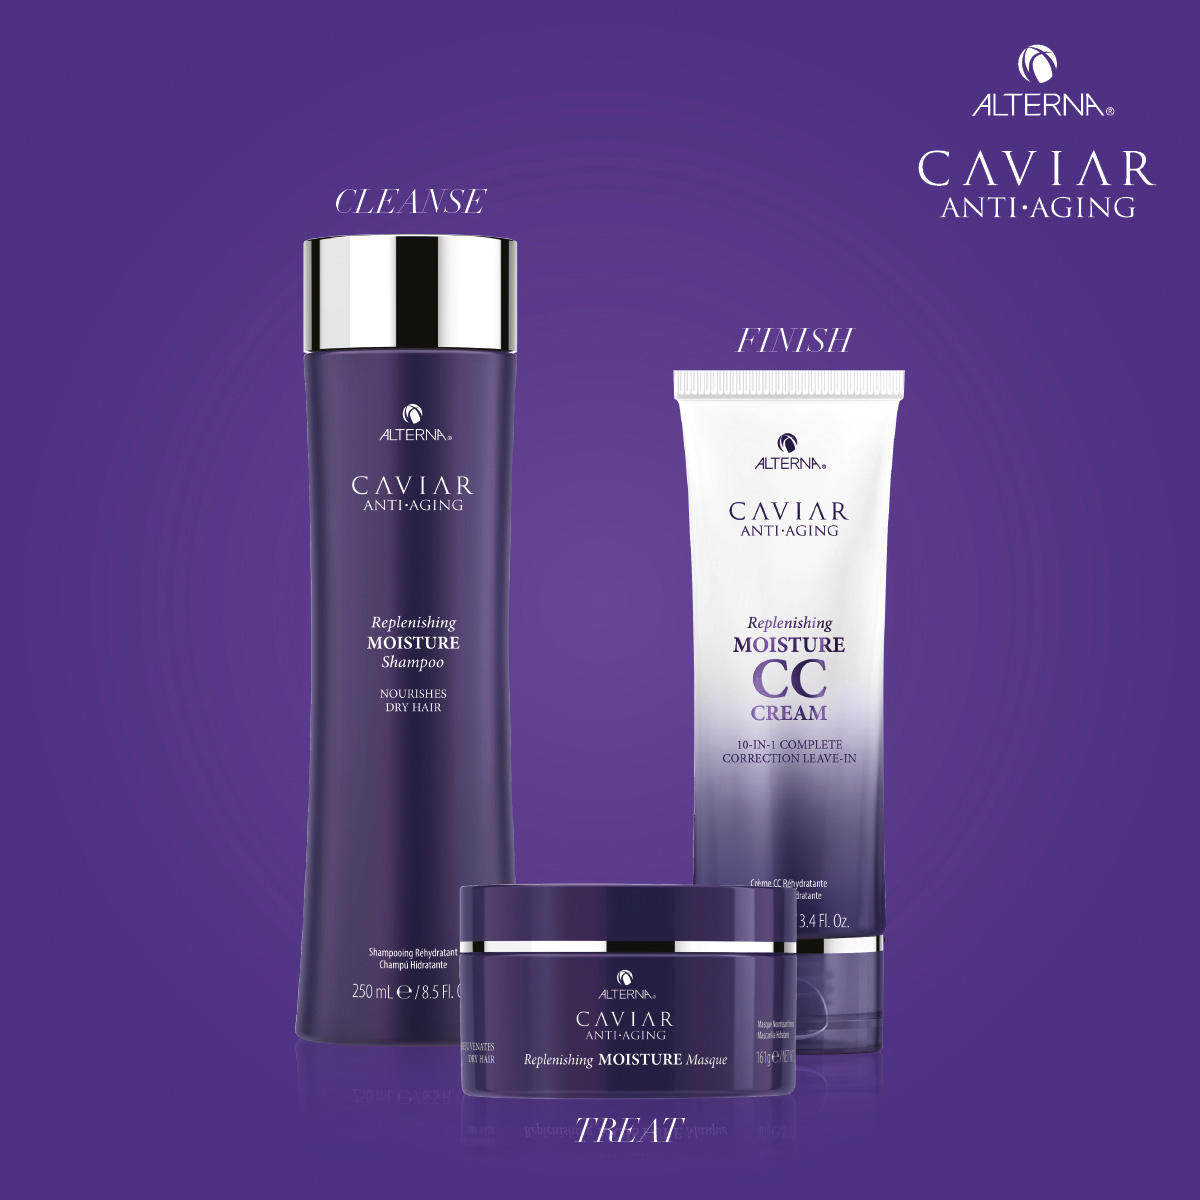 Alterna Caviar Anti-Aging Replenishing Moisture Masque 161 g - 5